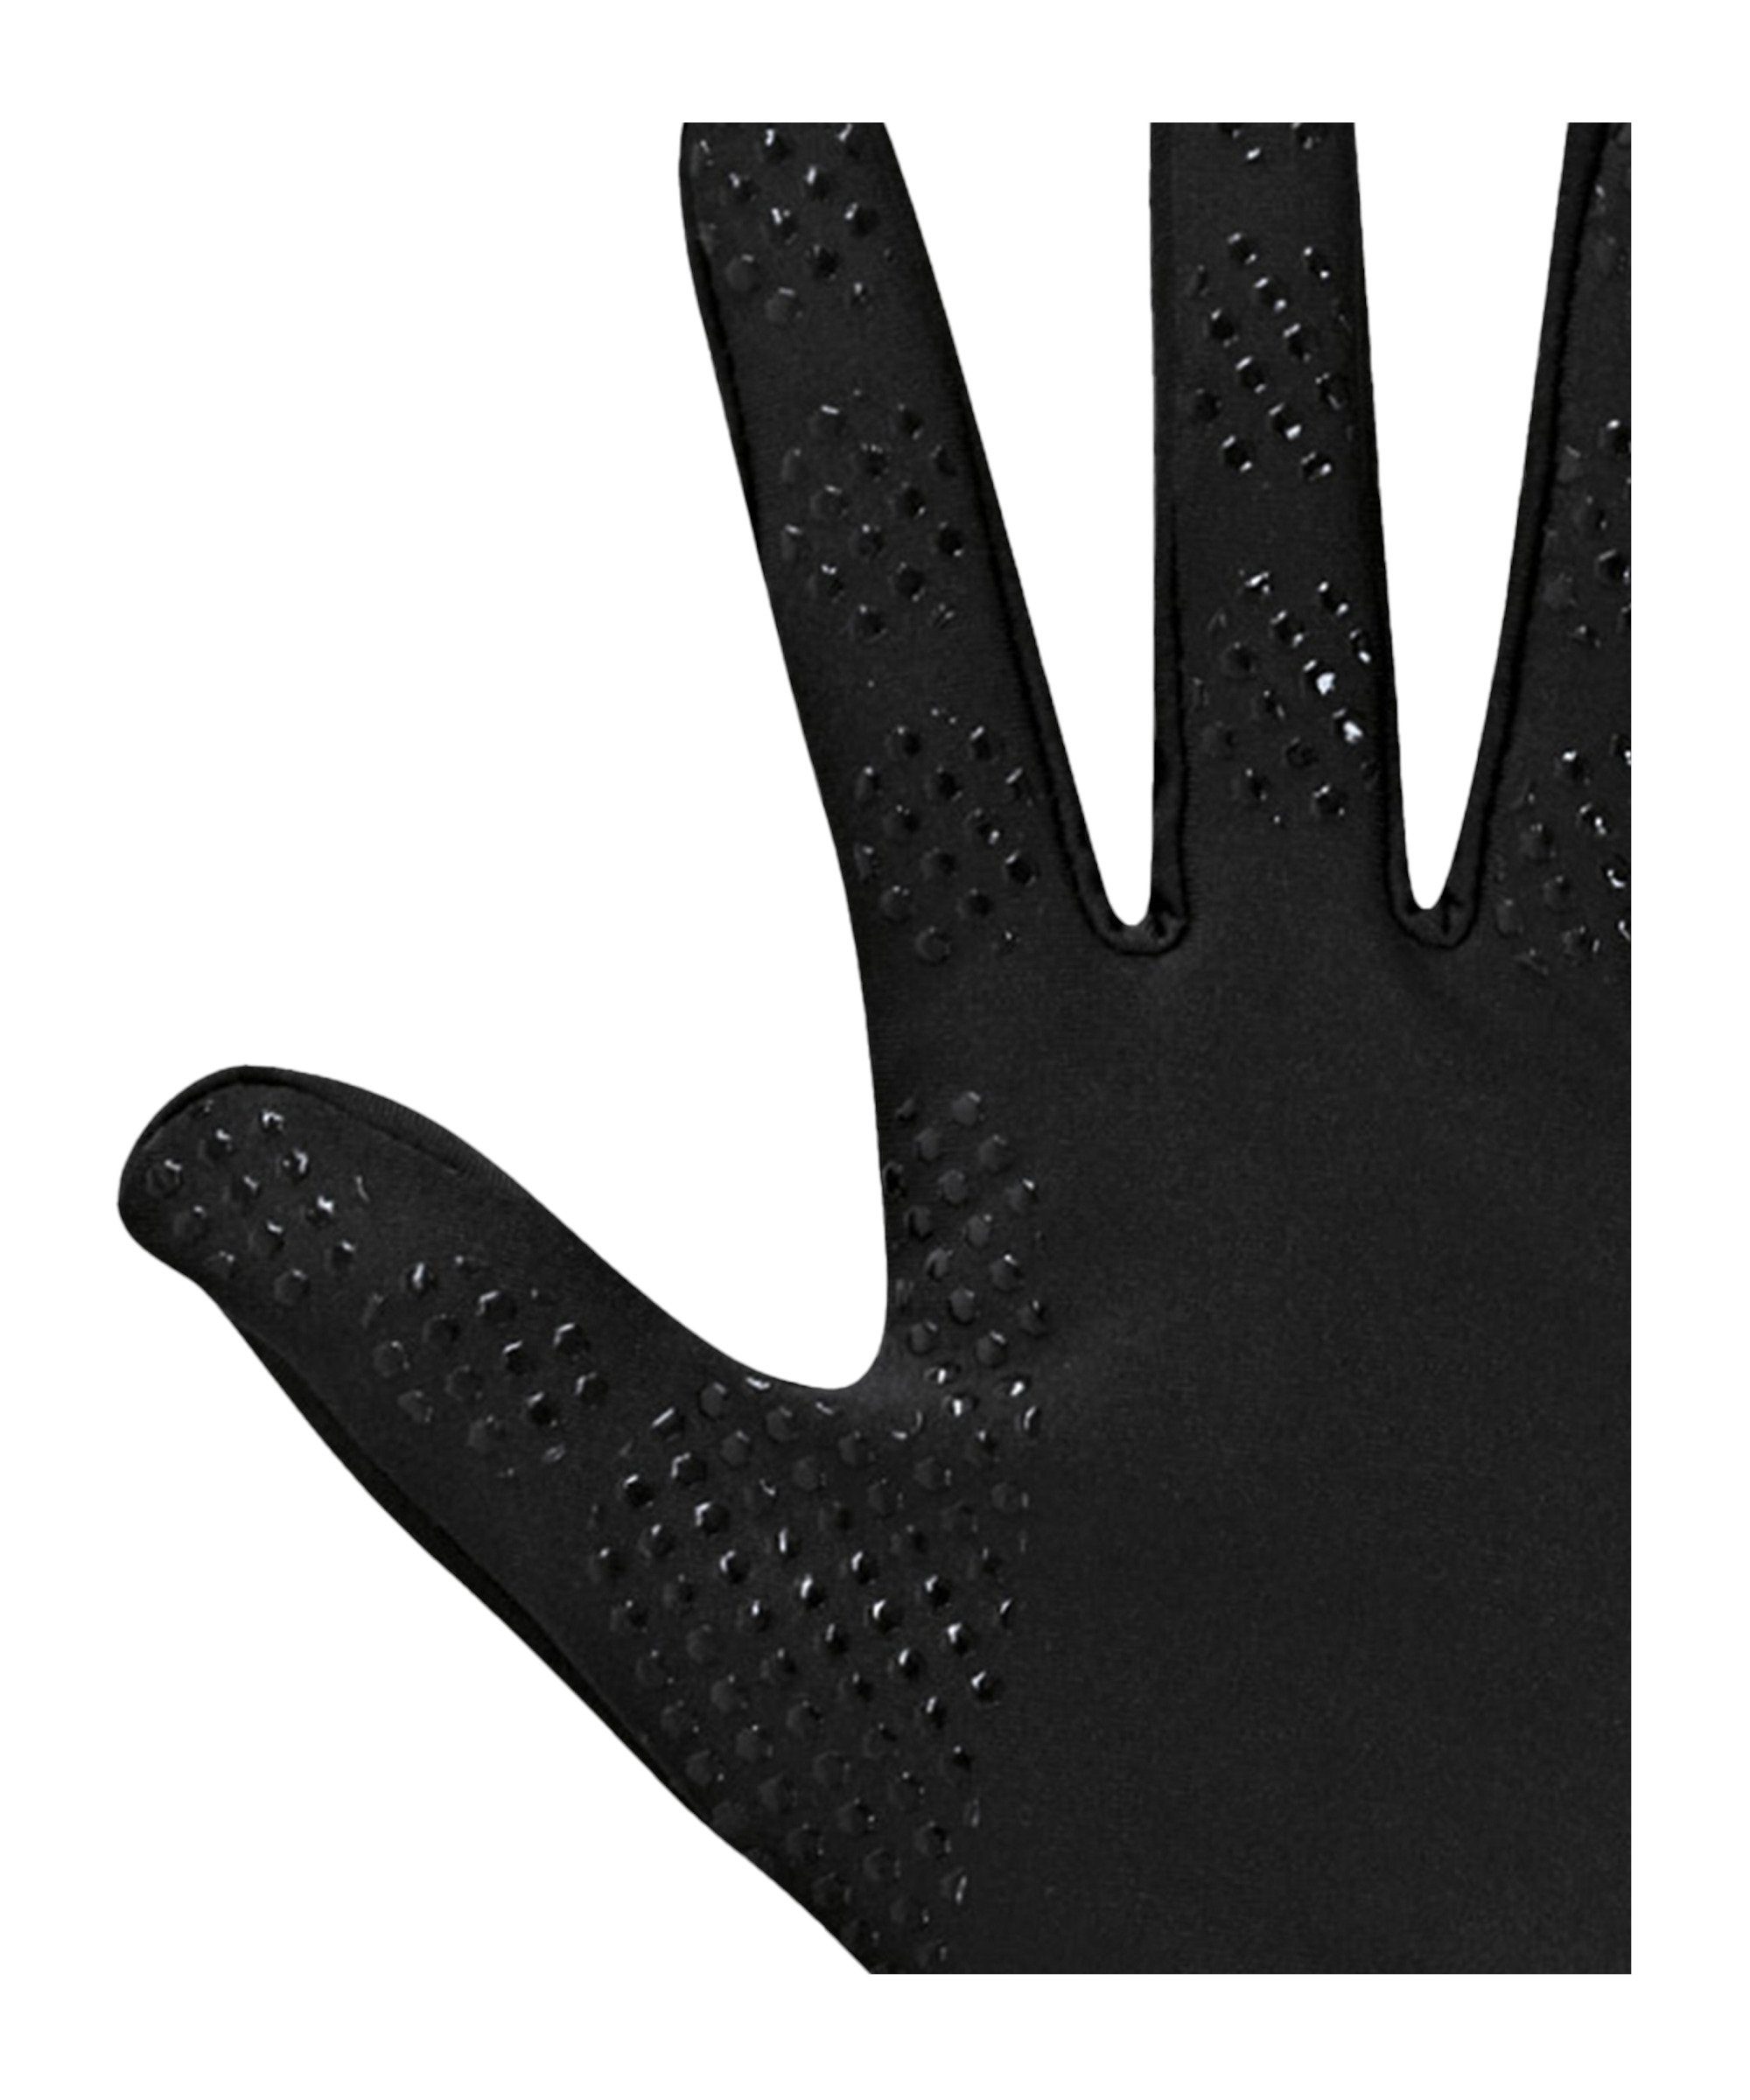 Feldspielerhandschuhe Feldspielerhandschuh schwarzweiss Jako